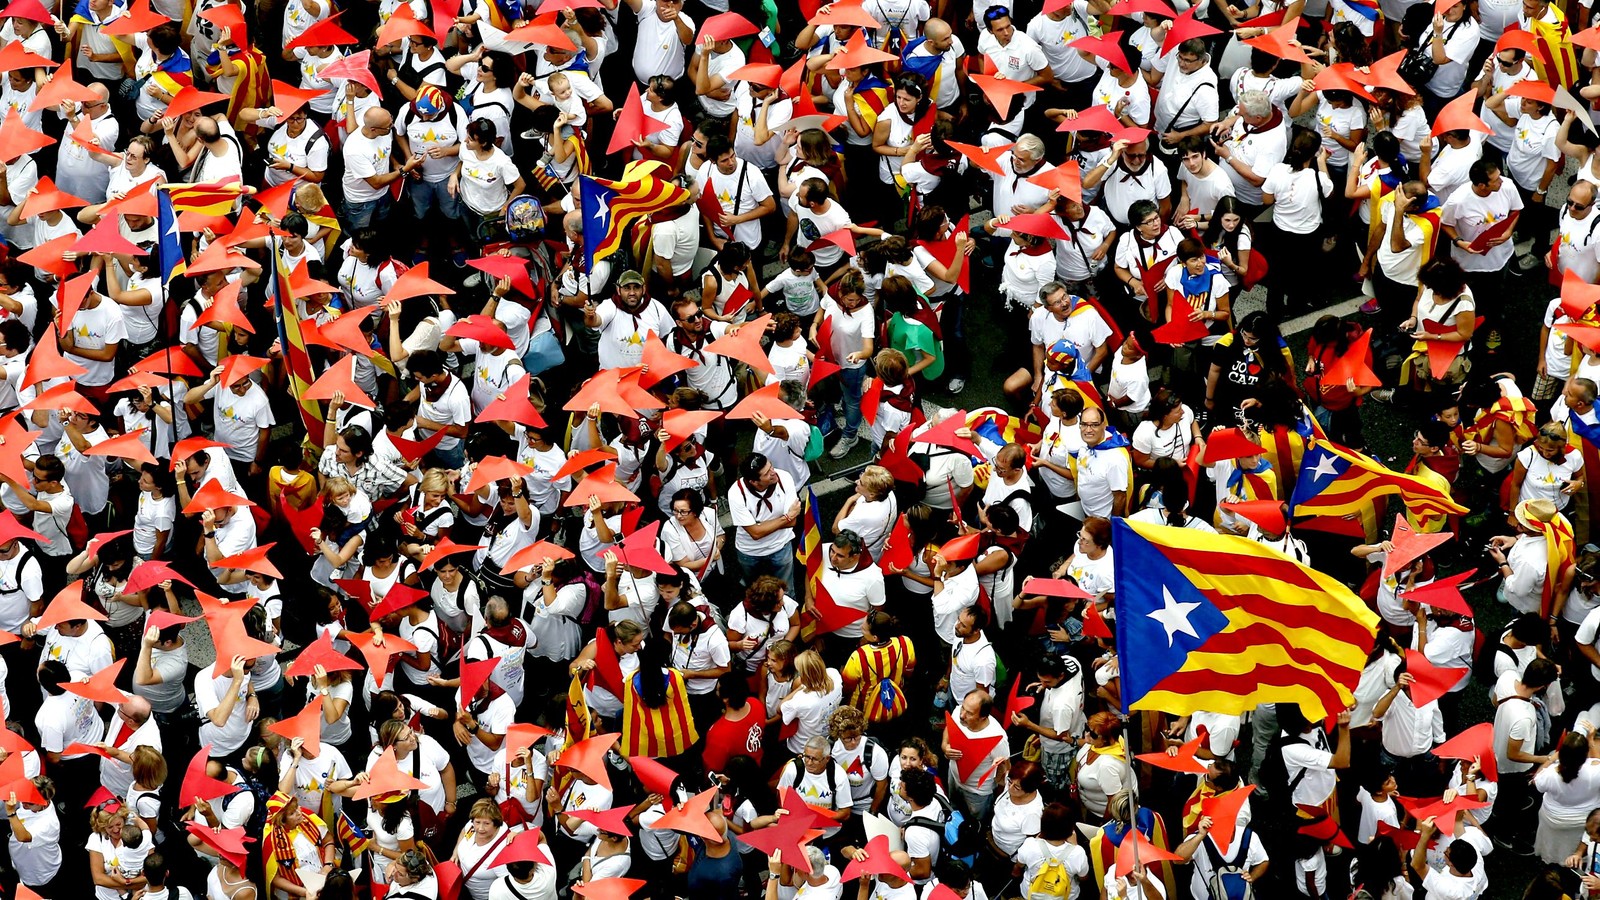 Catalan culture, language, history, and politics